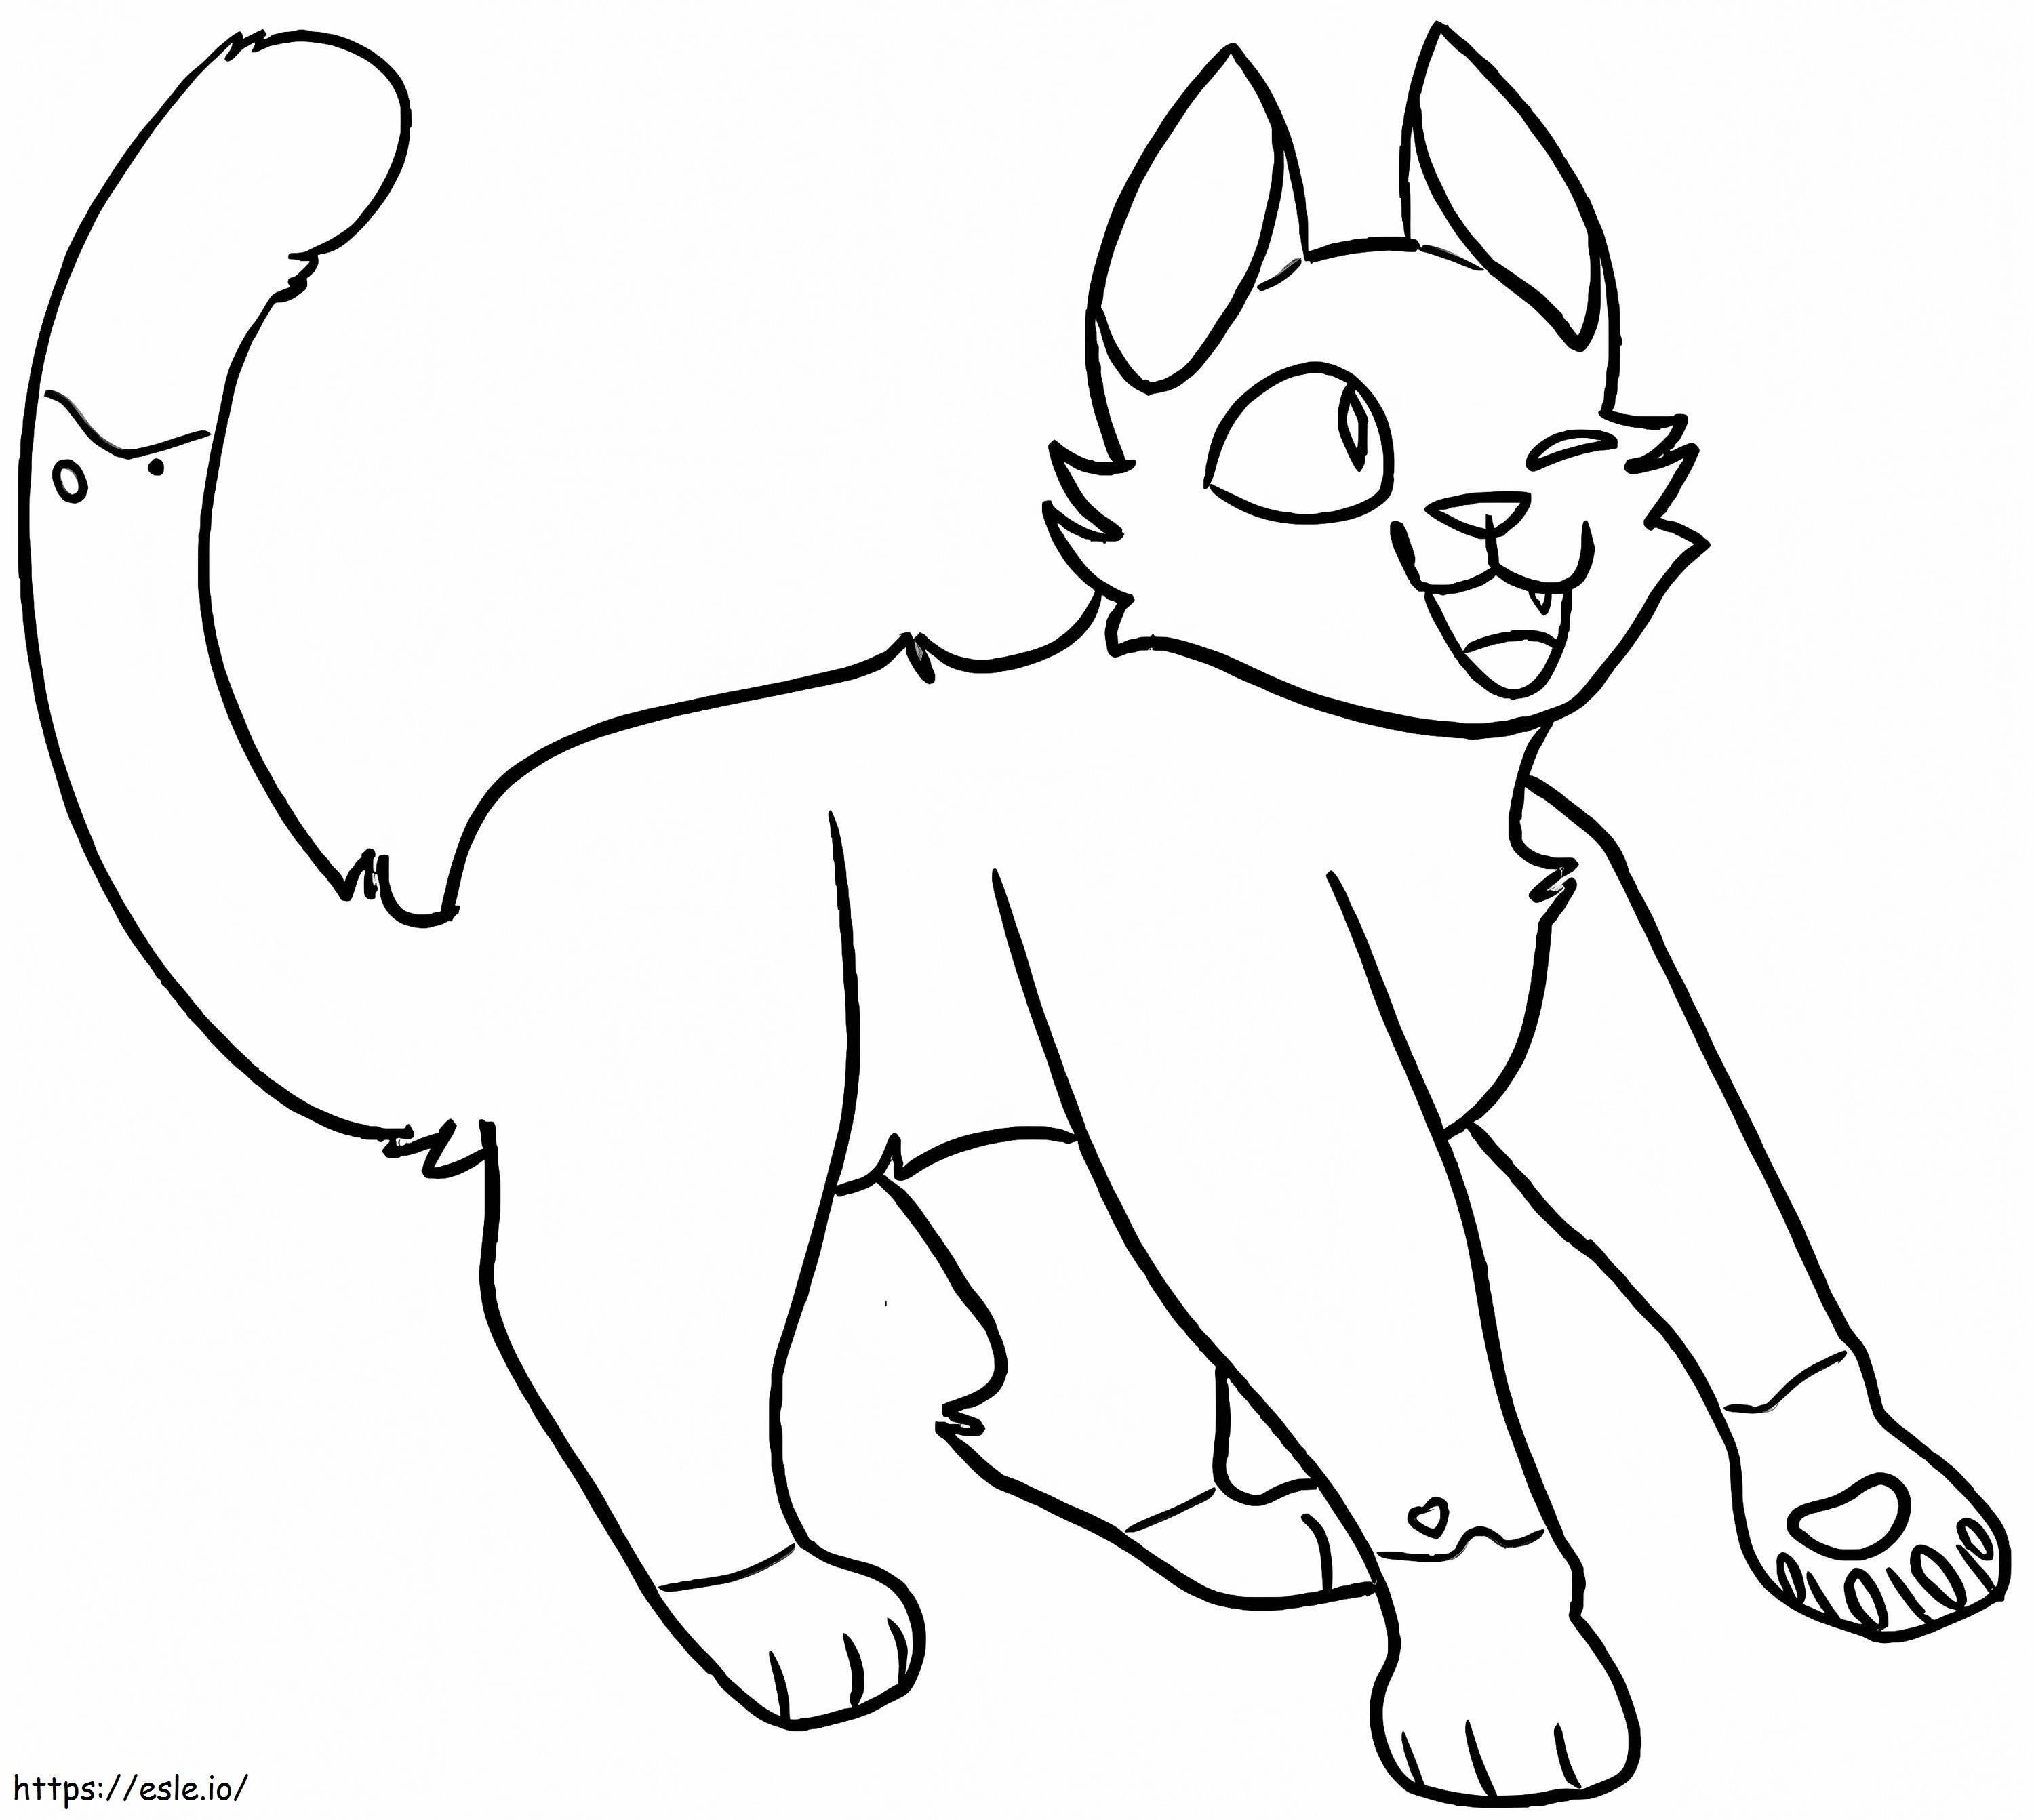 Cartoon kat in huisdiersimulator X kleurplaat kleurplaat